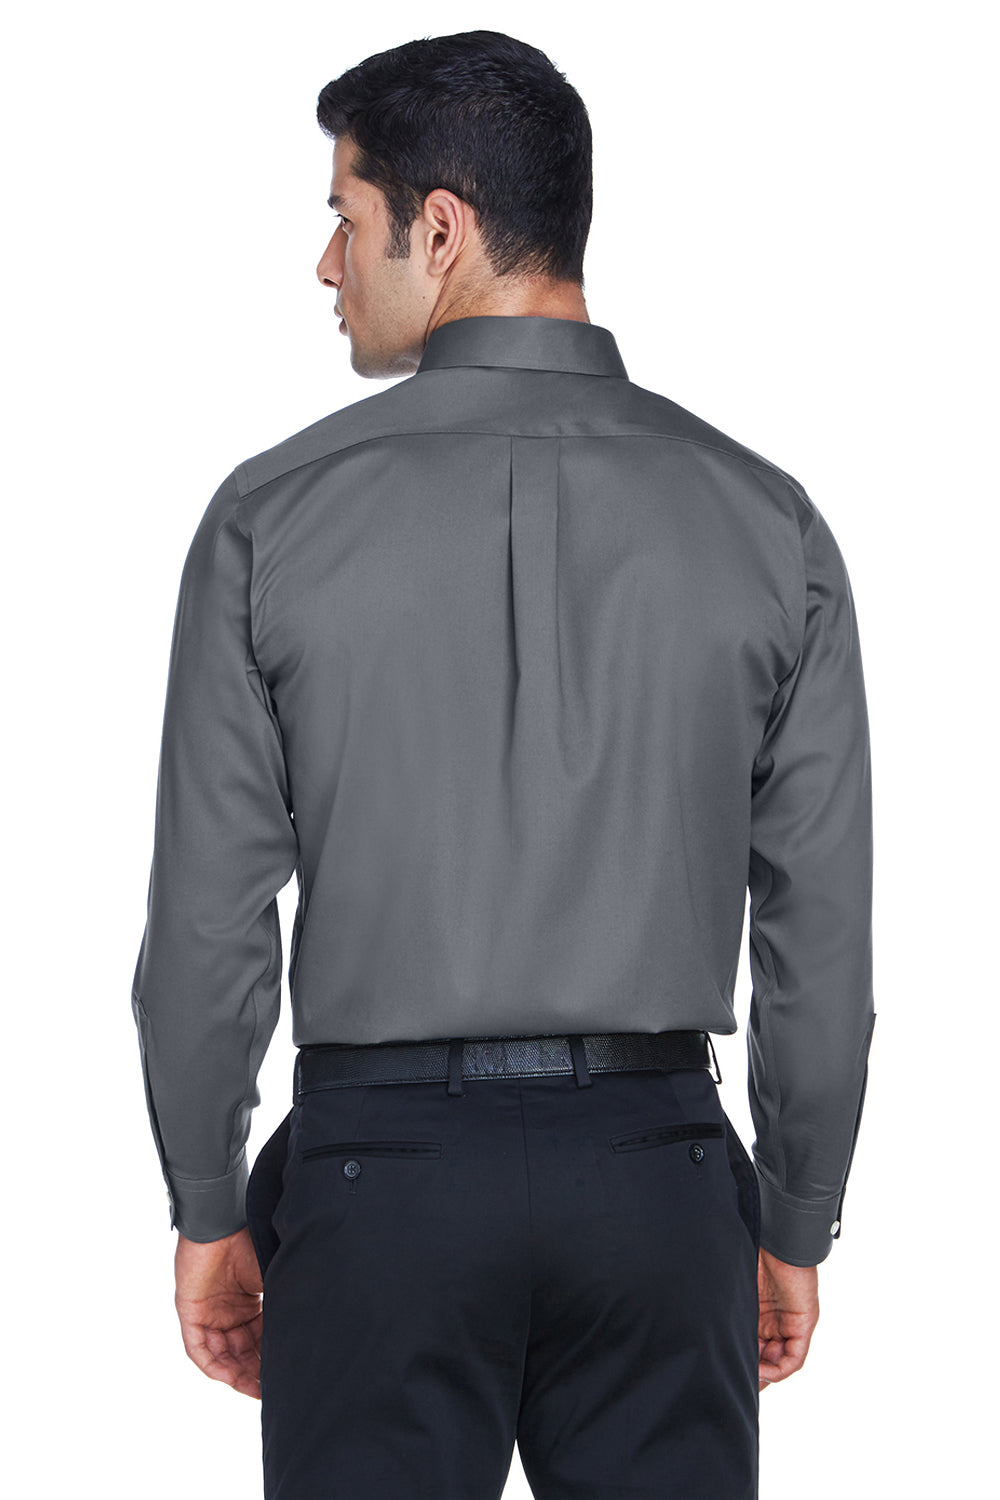 Devon & Jones DG530 Mens Crown Woven Collection Wrinkle Resistant Long Sleeve Button Down Shirt w/ Pocket Graphite Grey Back